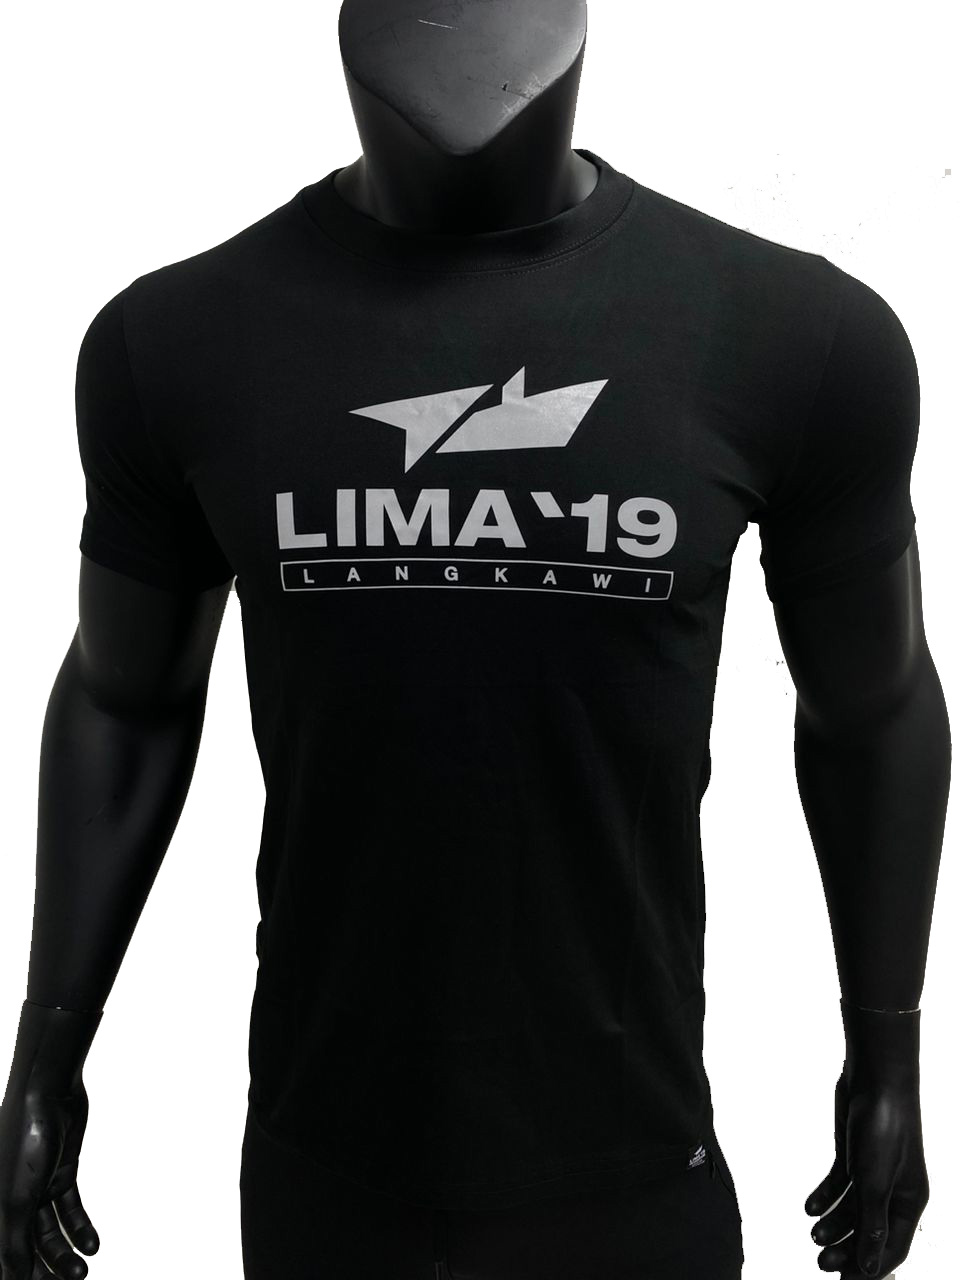 LIMA'19 Round Neck T-Shirt (Logo Reflector) Black & Maroon